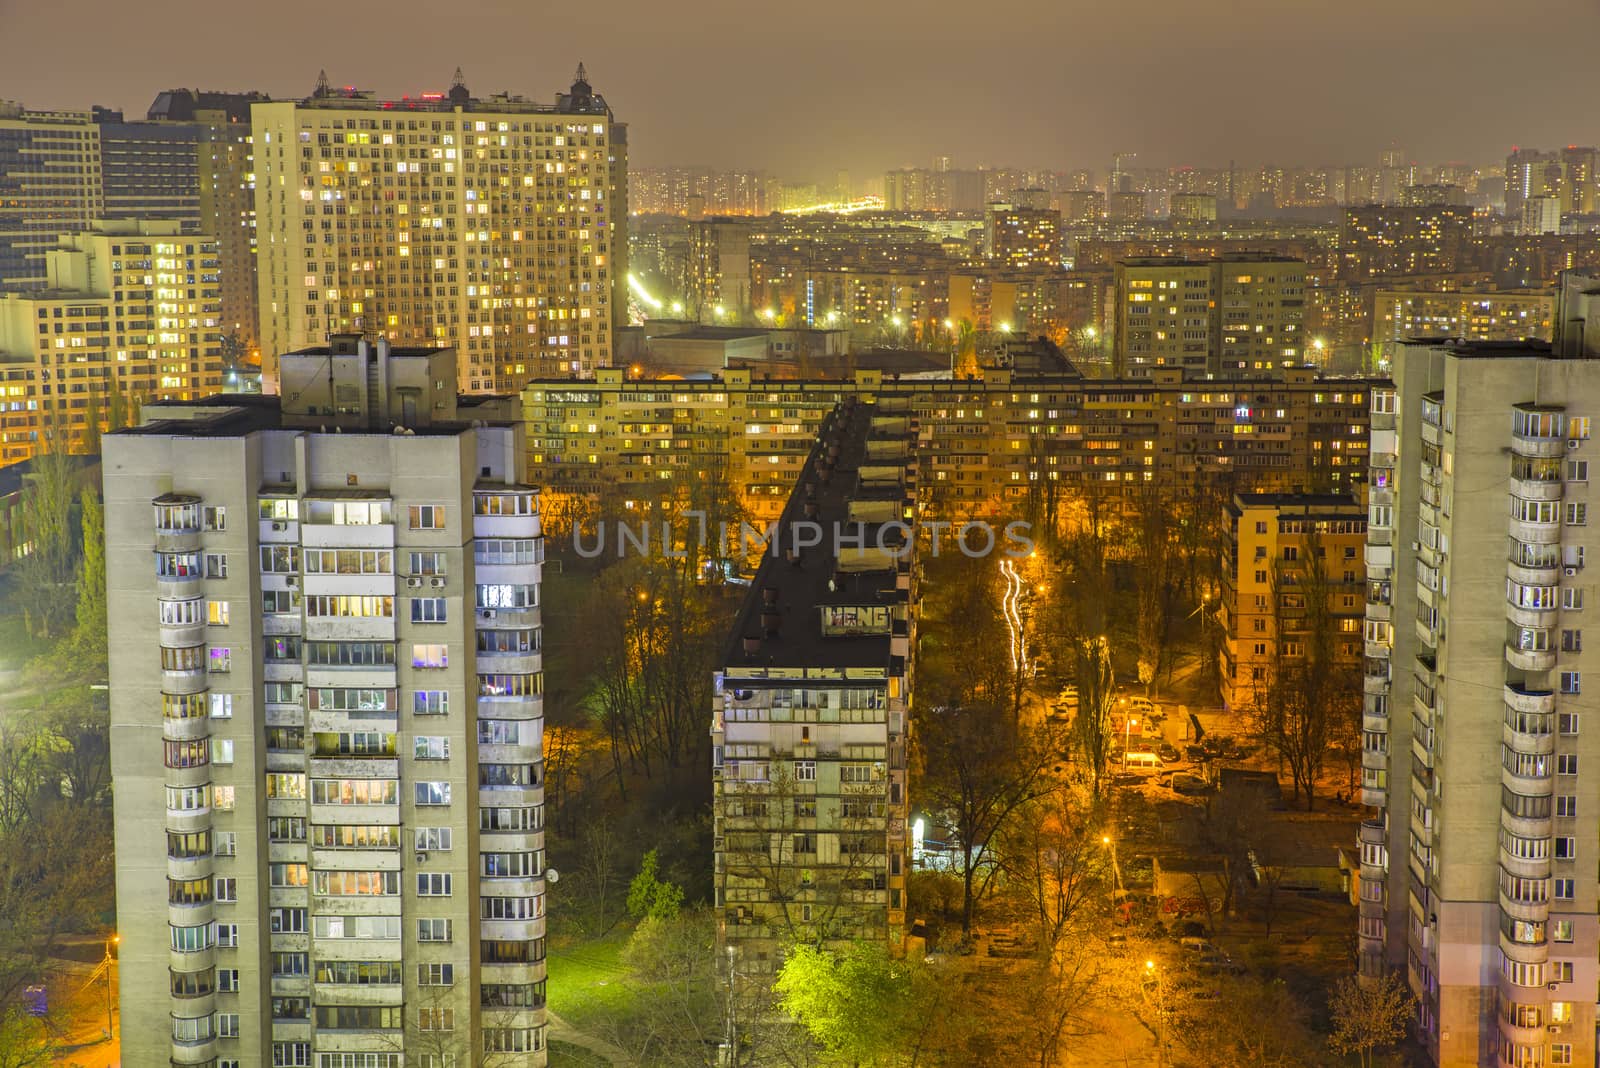 Aerial night scene of housing estate buildings in Kiev, Ukraine